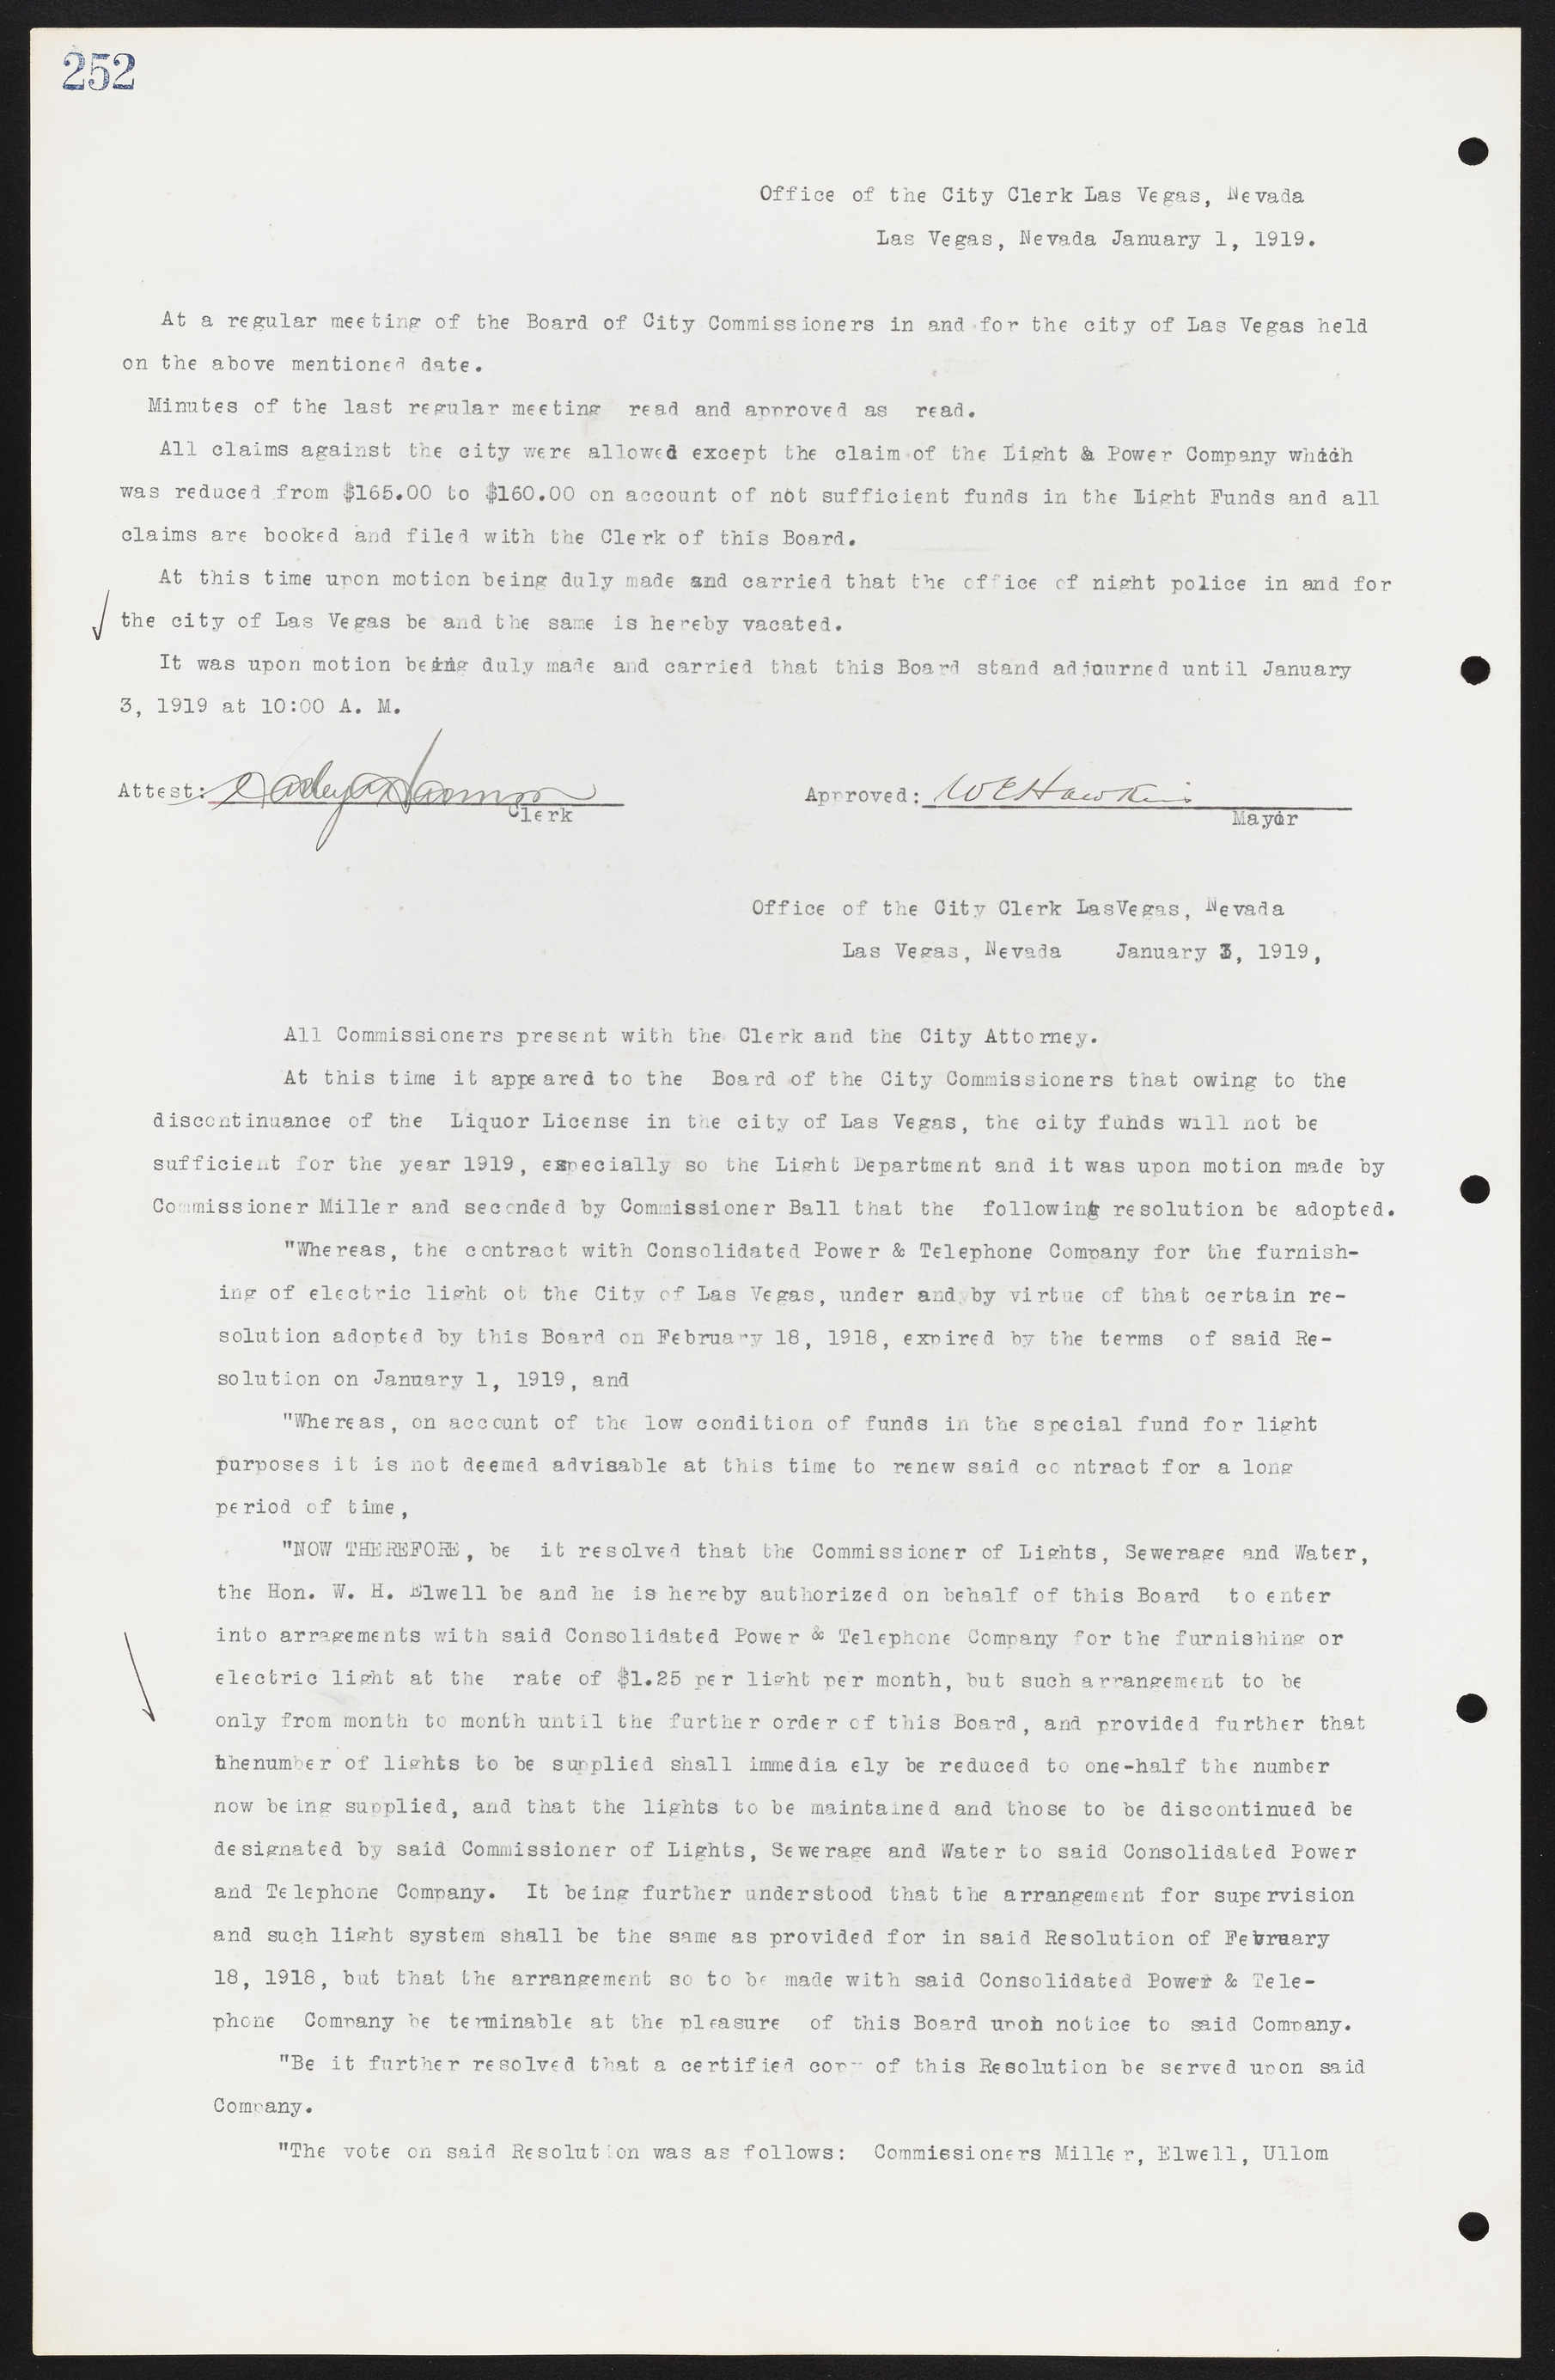 Las Vegas City Commission Minutes, June 22, 1911 to February 7, 1922, lvc000001-268